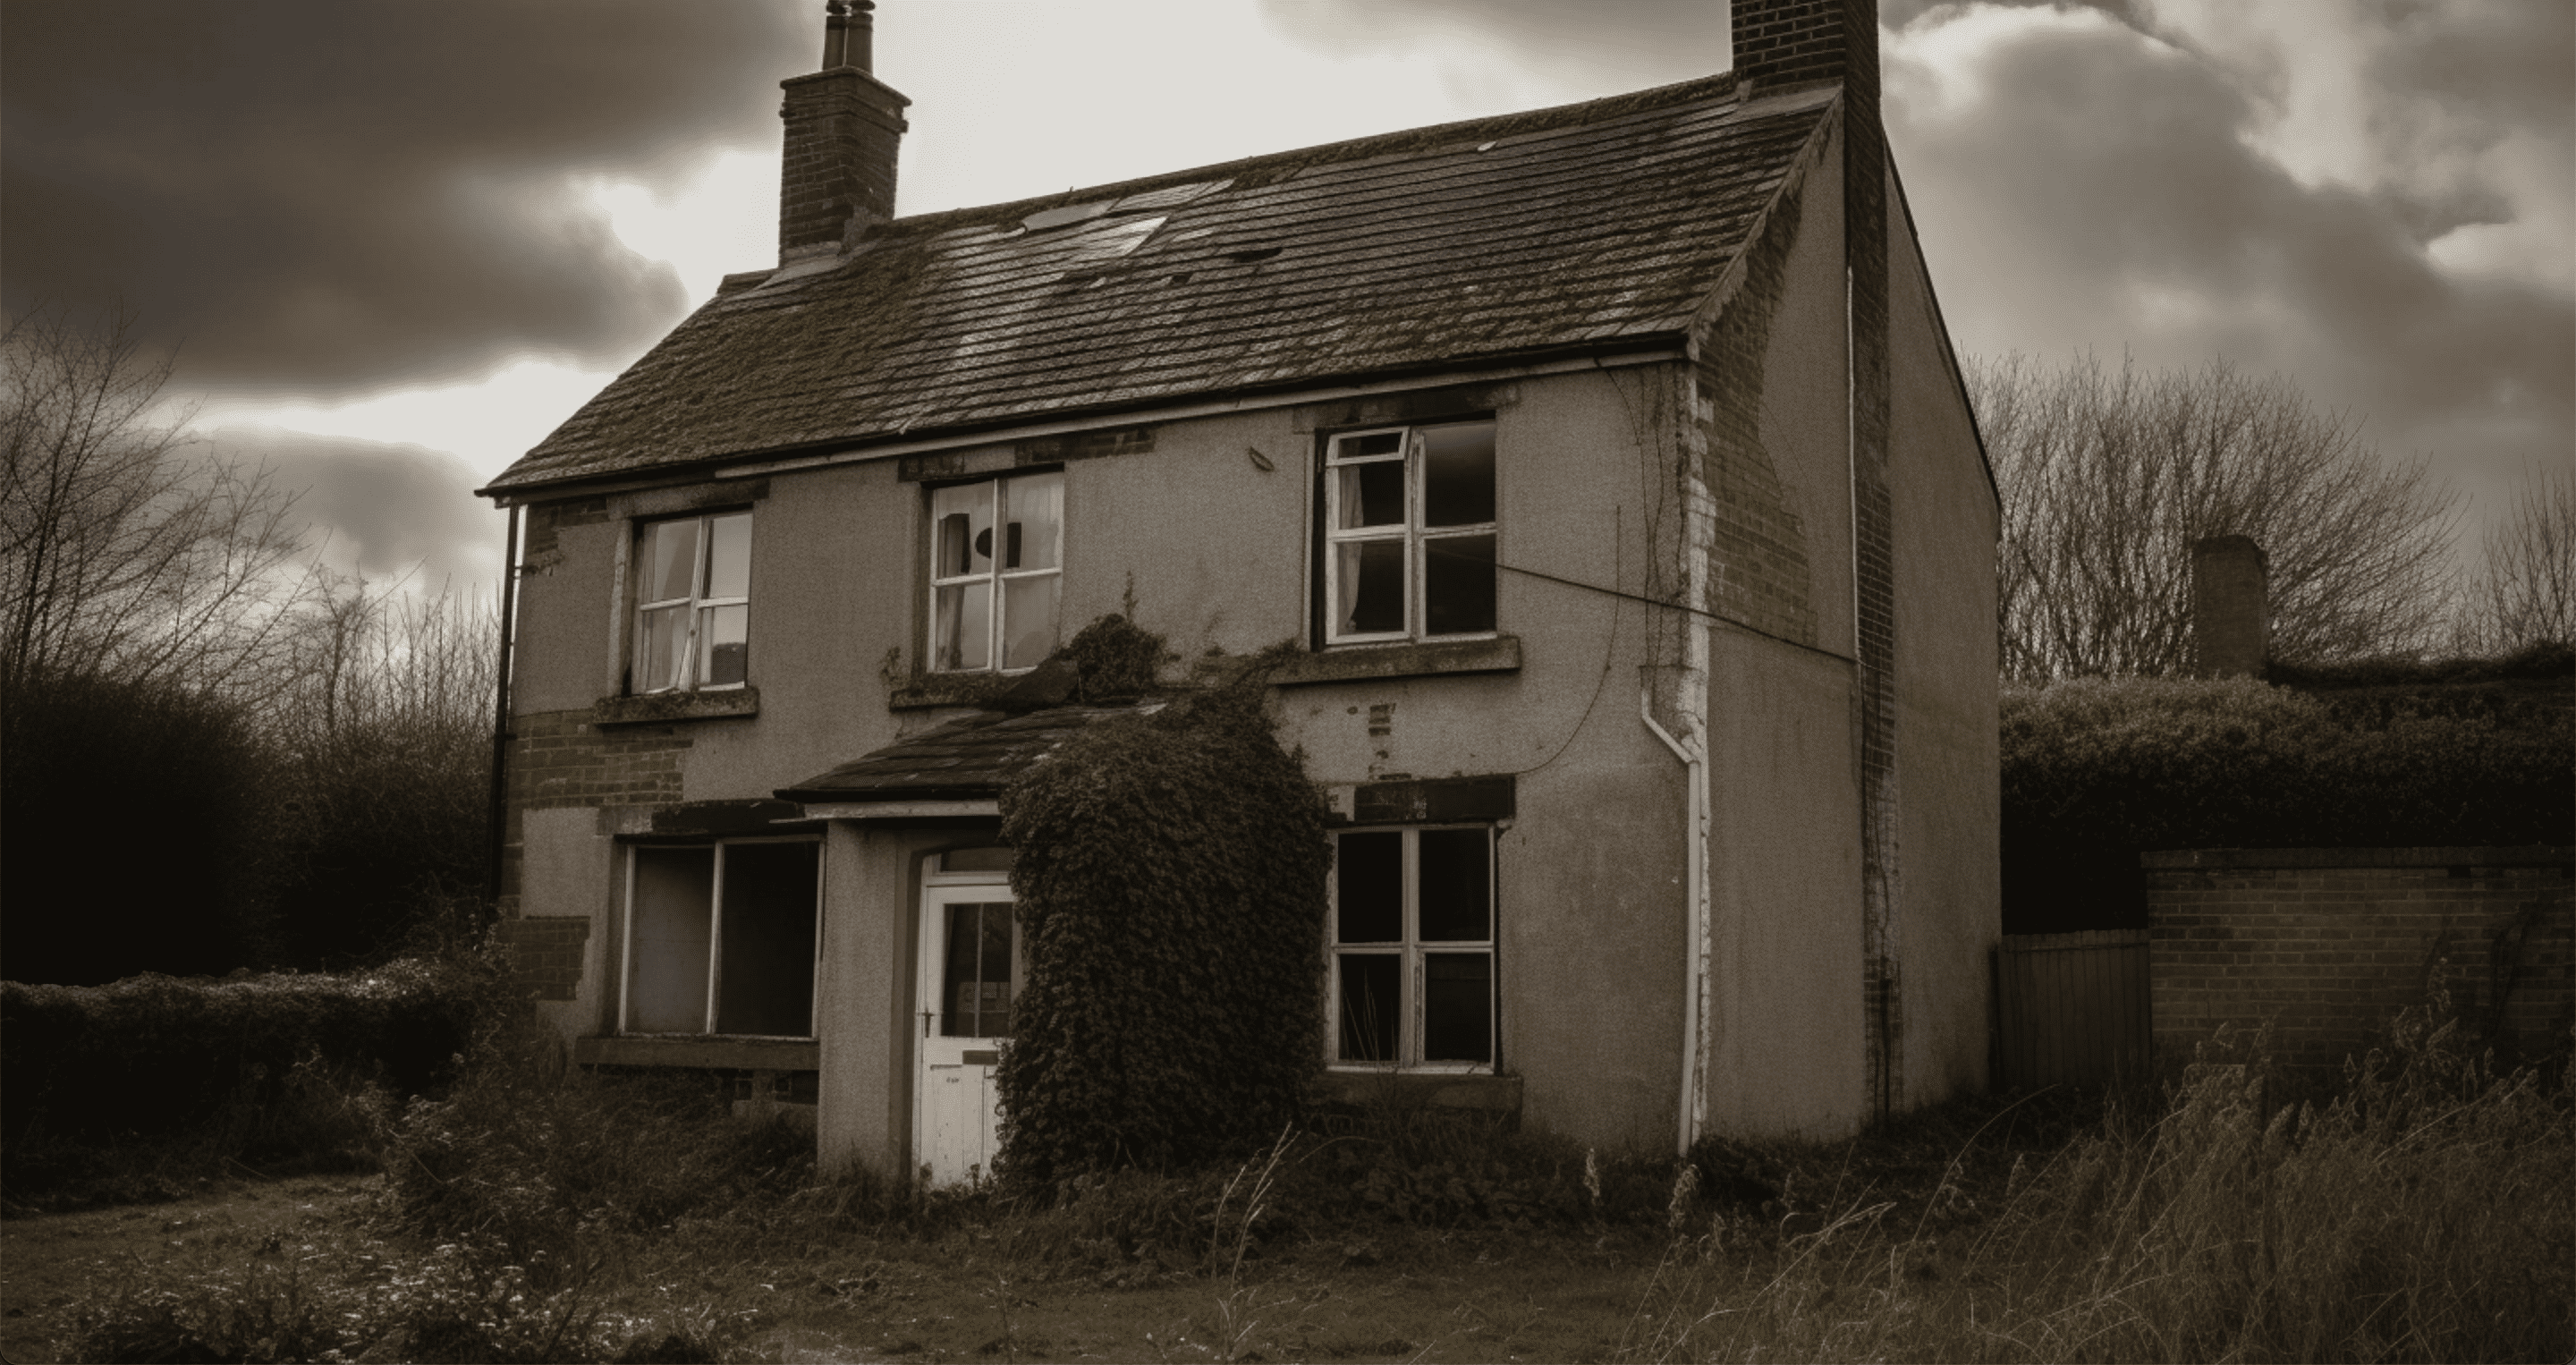 Abandoned detached house